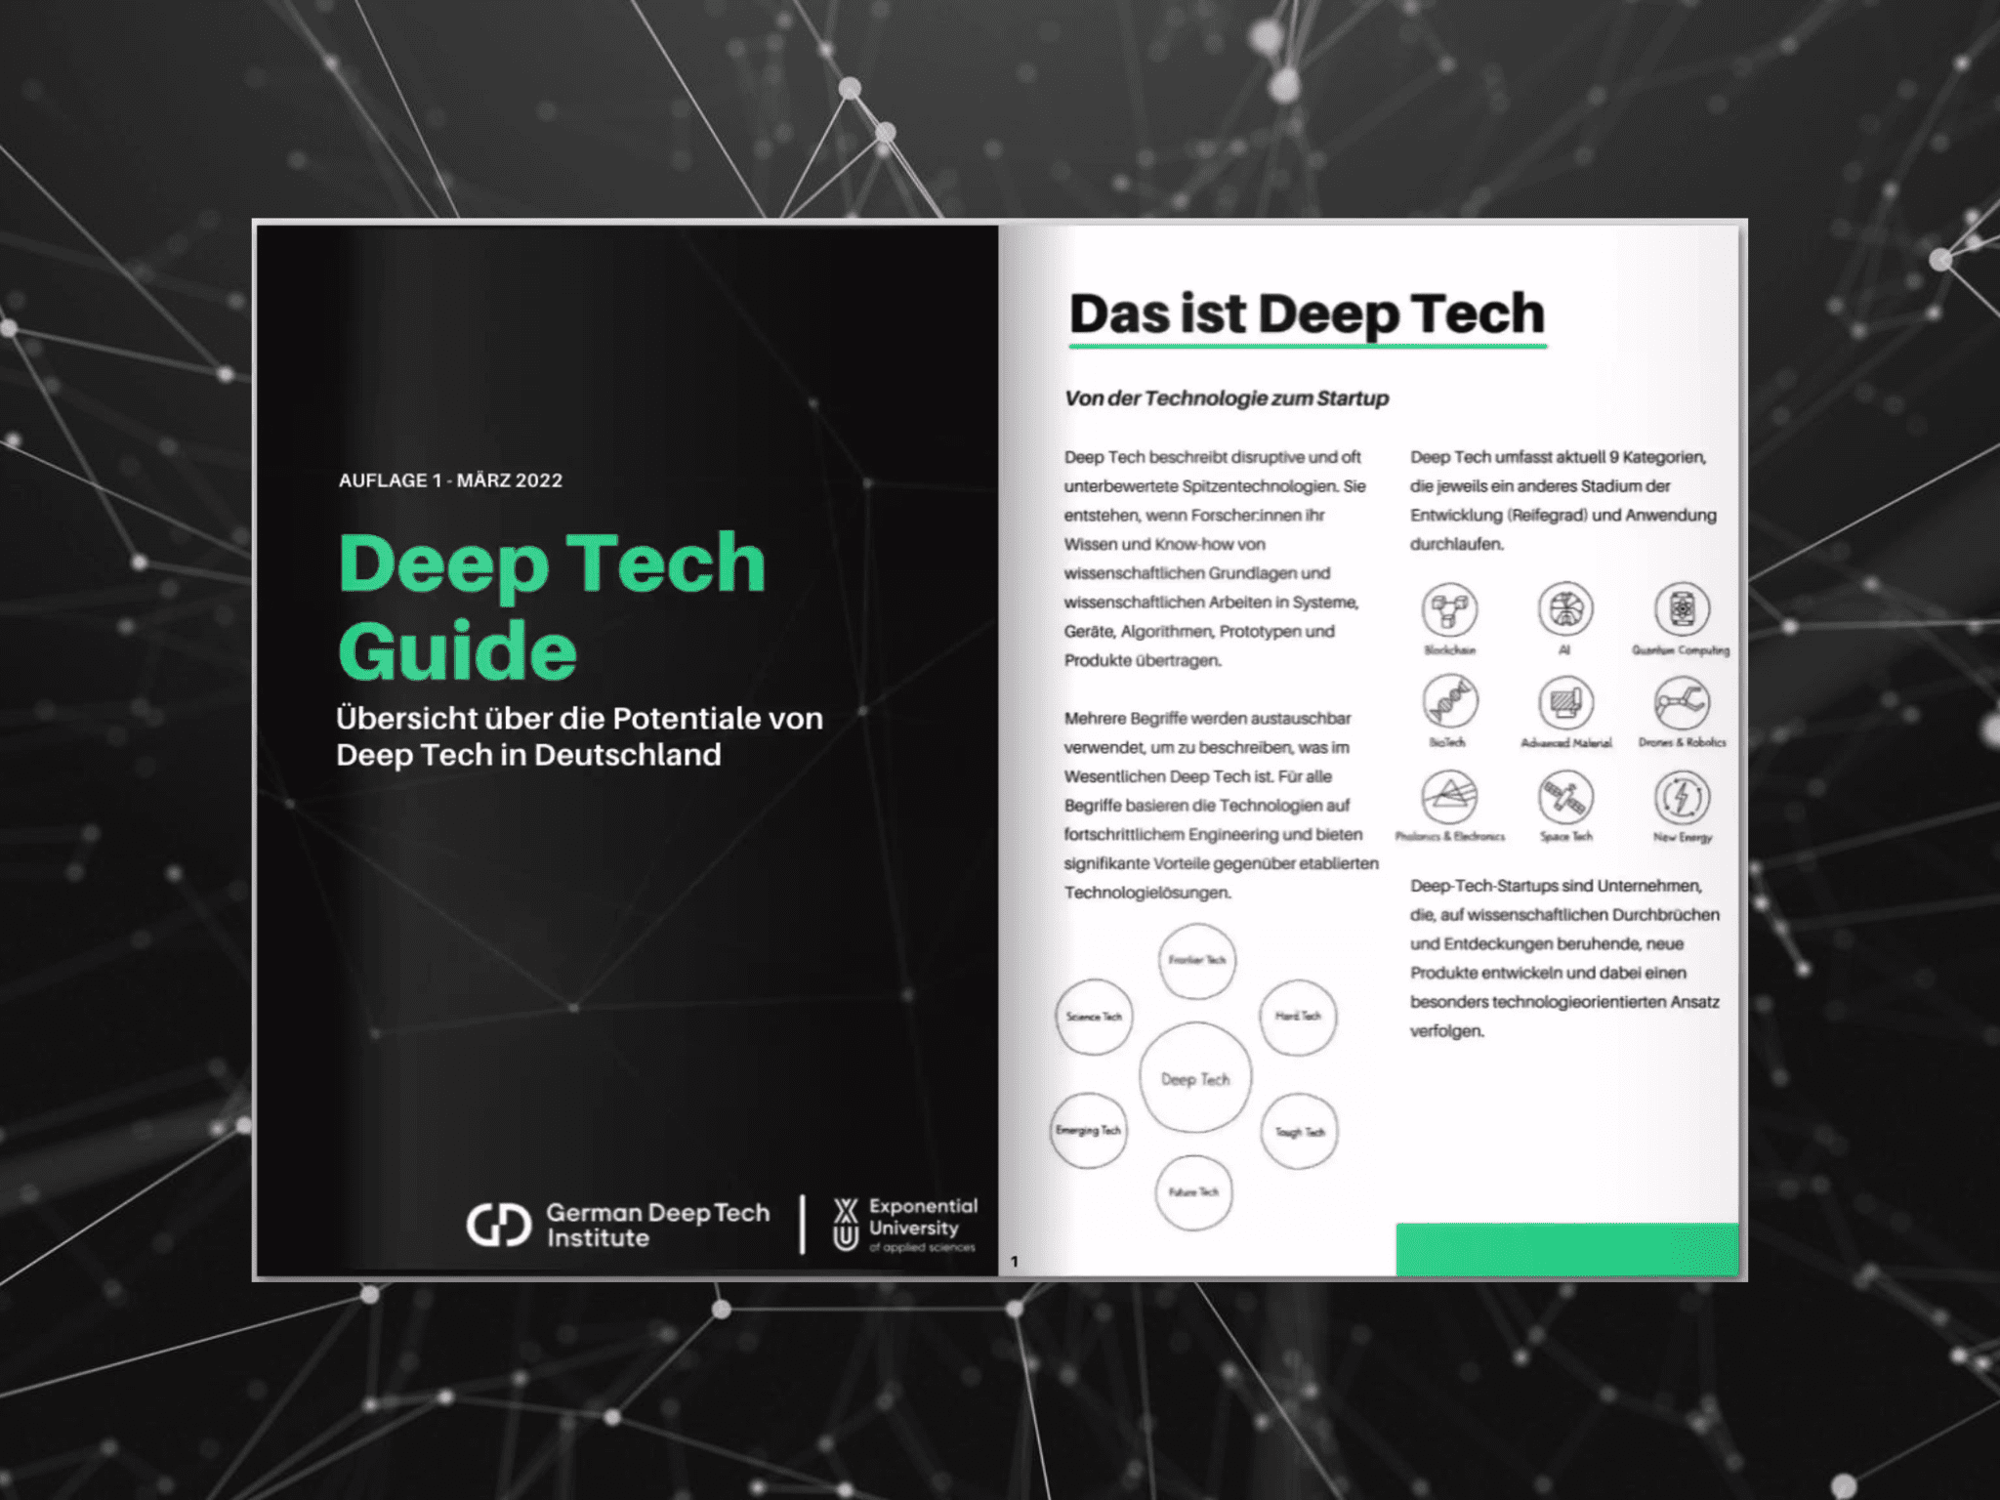 German Deep Tech Institute